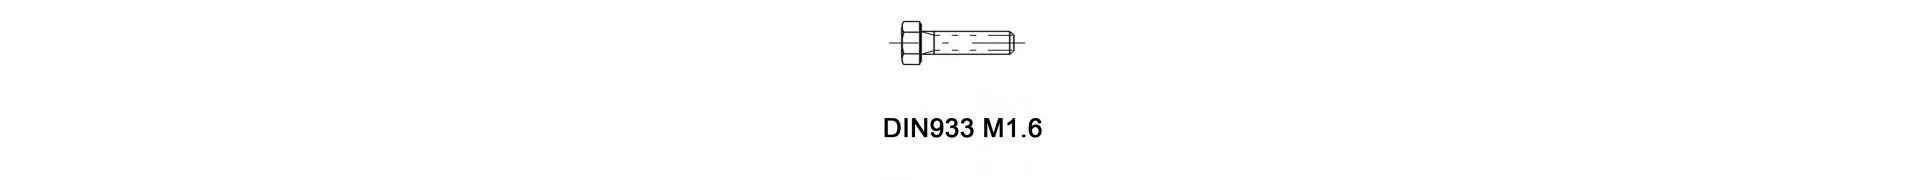 DIN933 M1.6